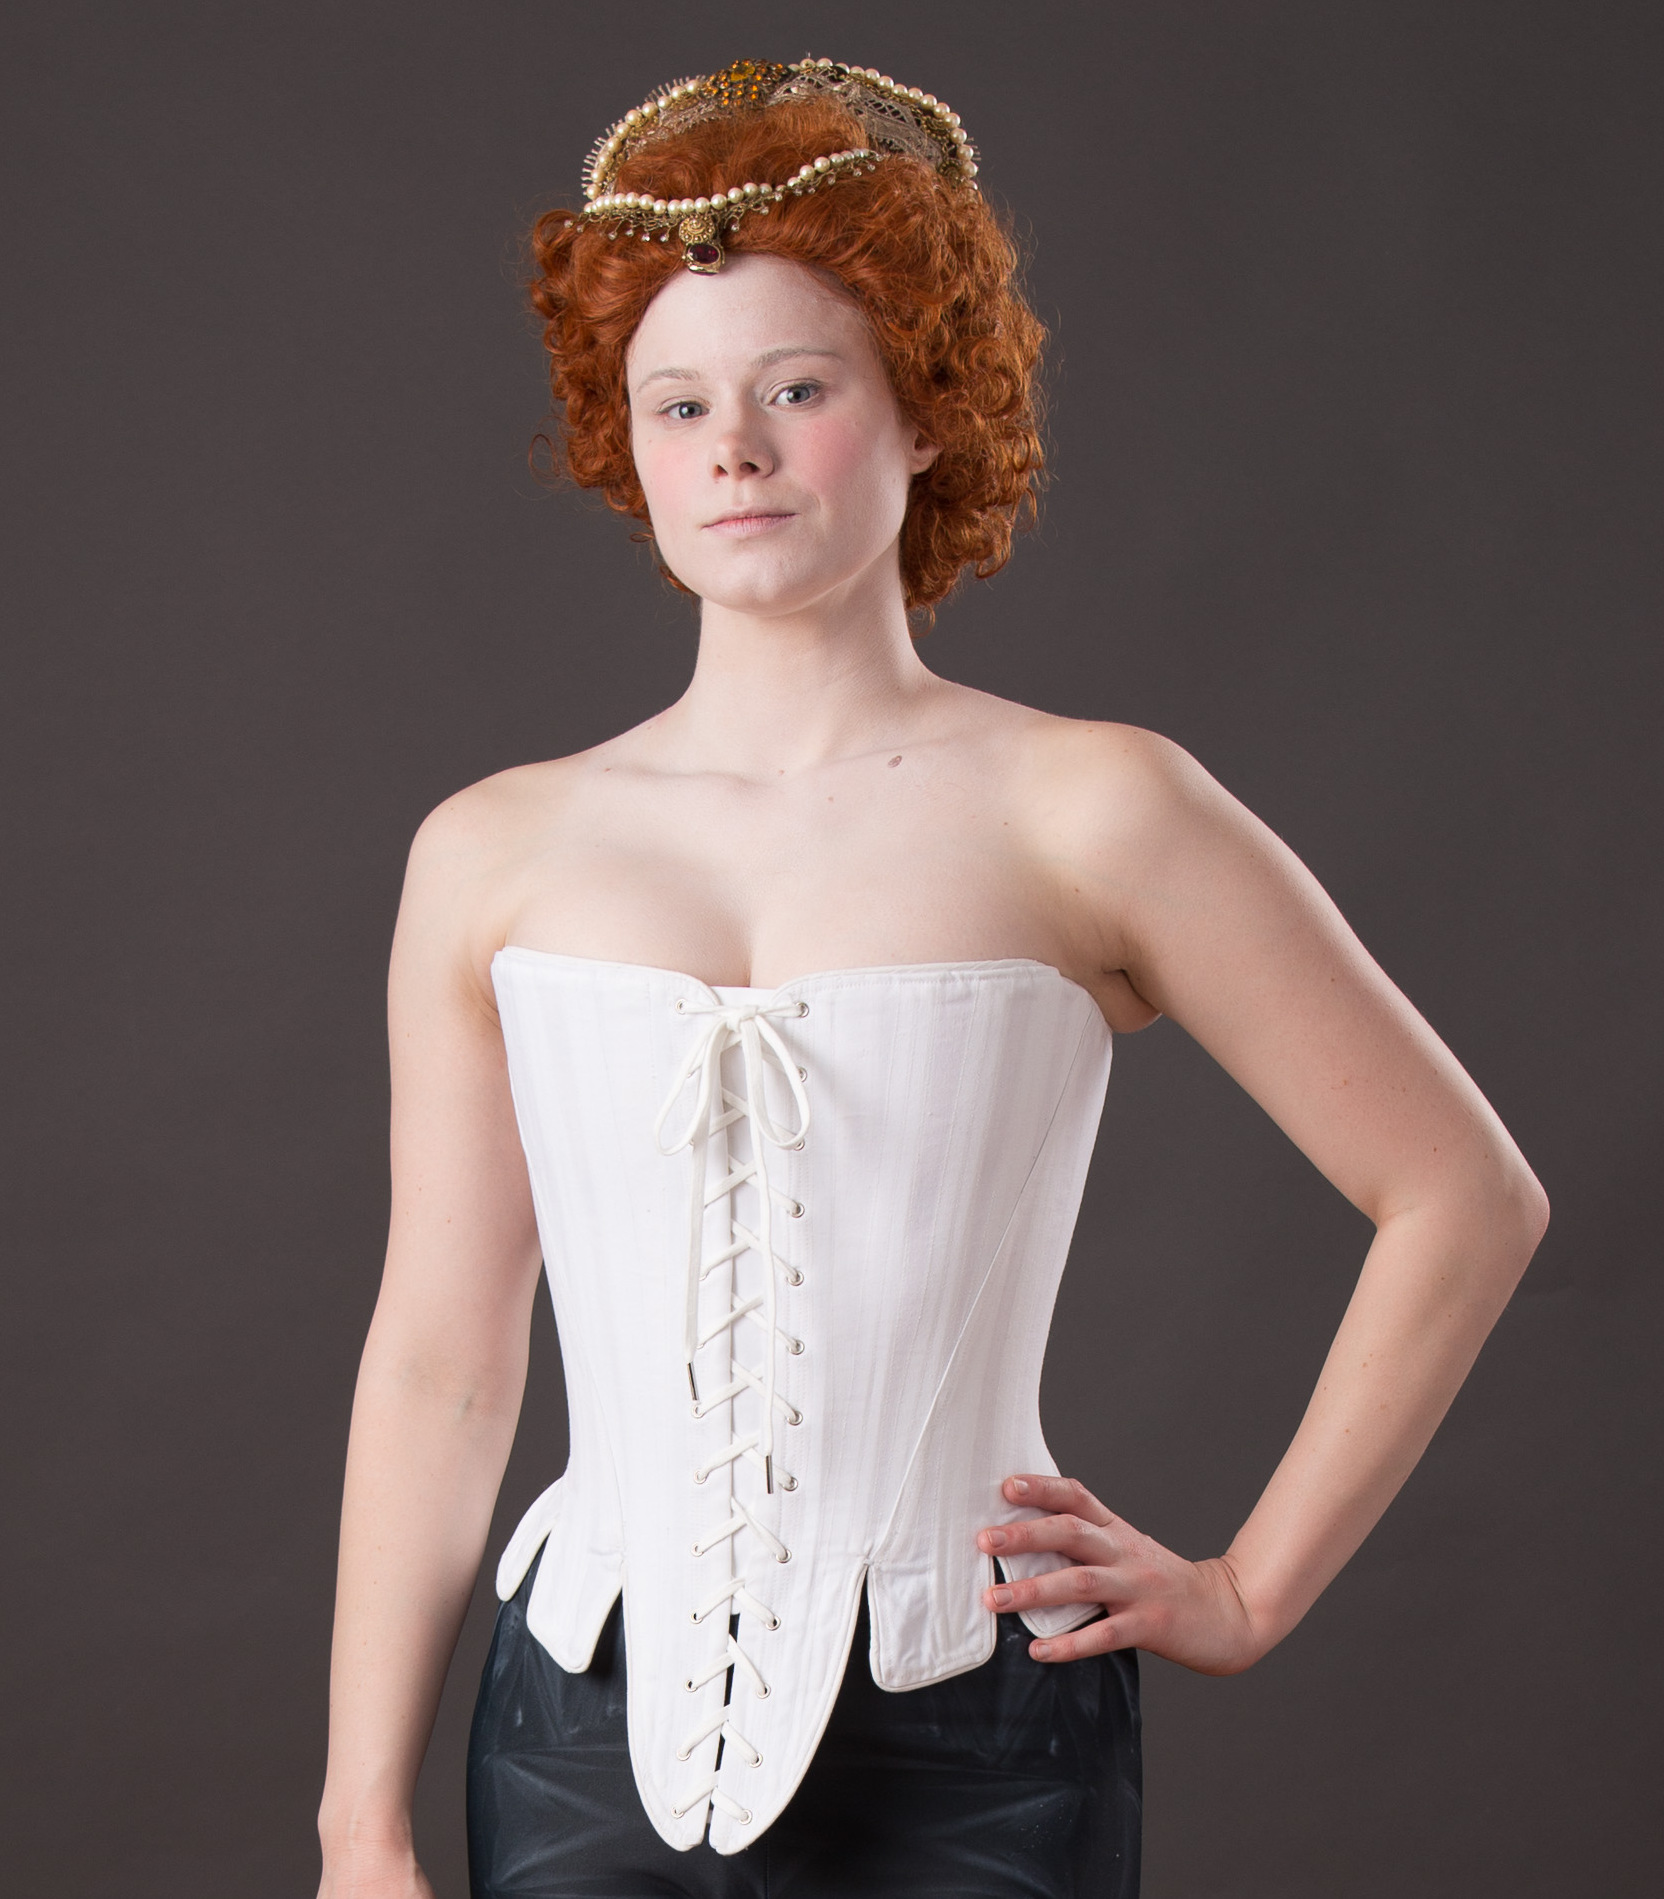 jcp-corsets-april-297.jpg